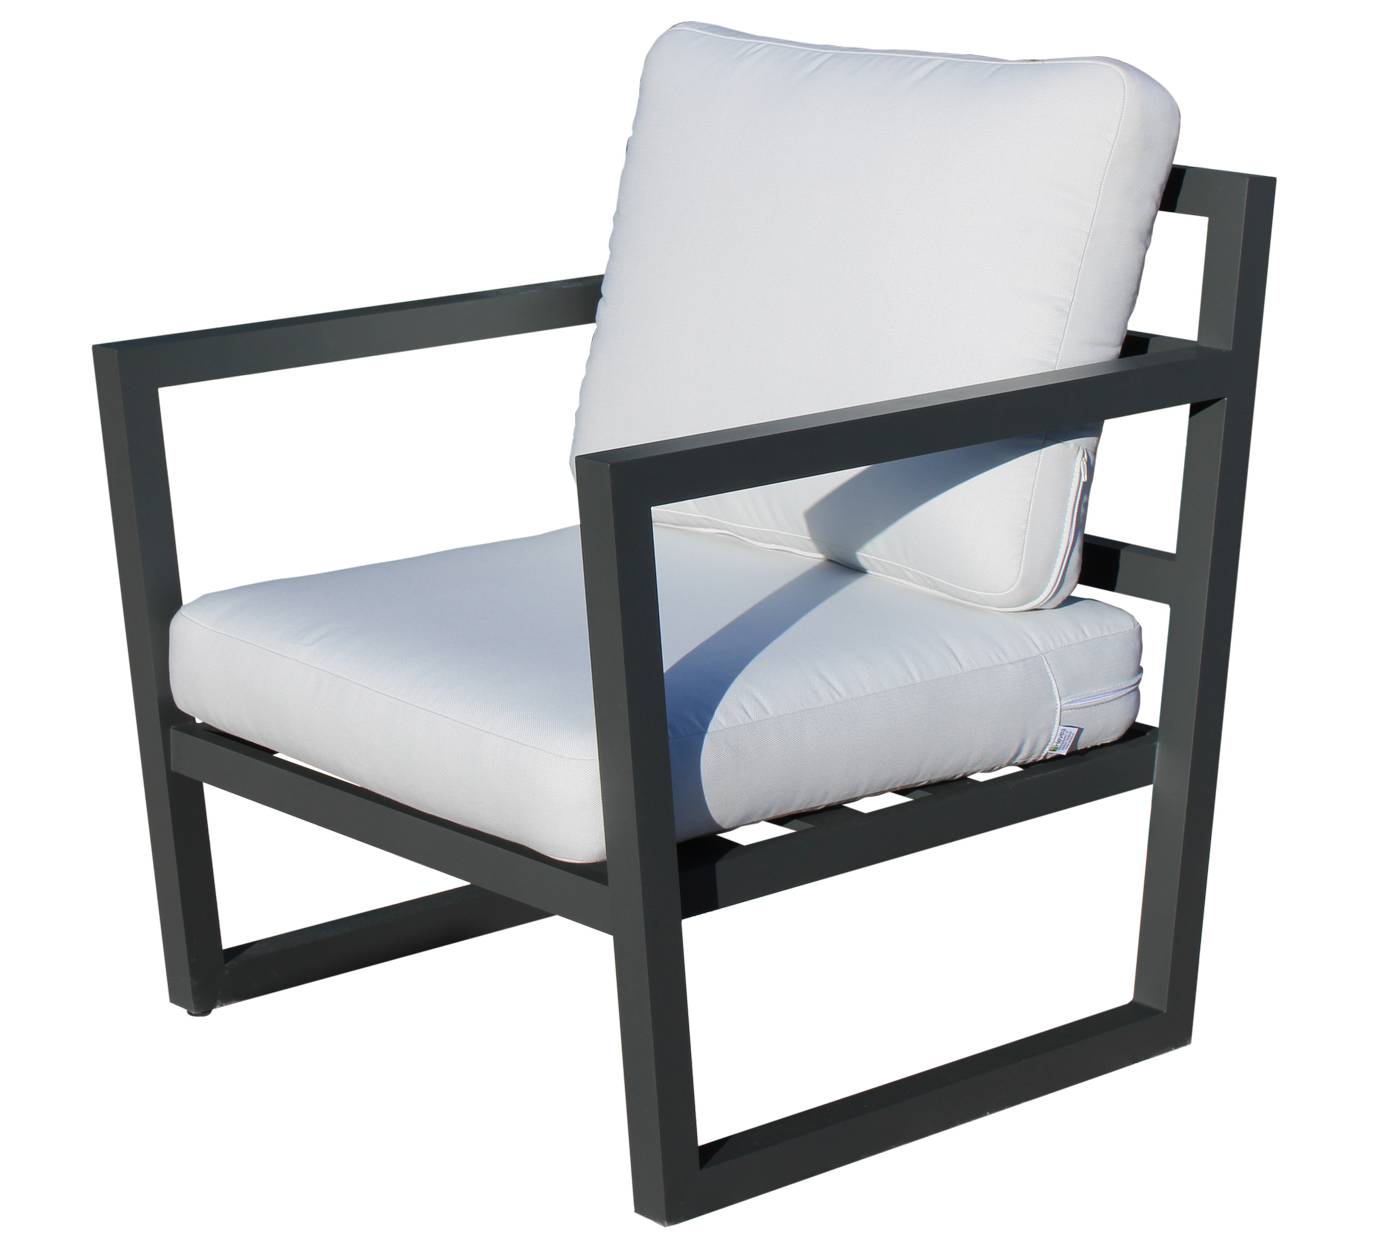 Set Aluminio Piona-7 - Conjunto de aluminio para exterior: sofá 2 plazas + 2 sillones + mesa de centro. Disponible en cinco colores diferentes.